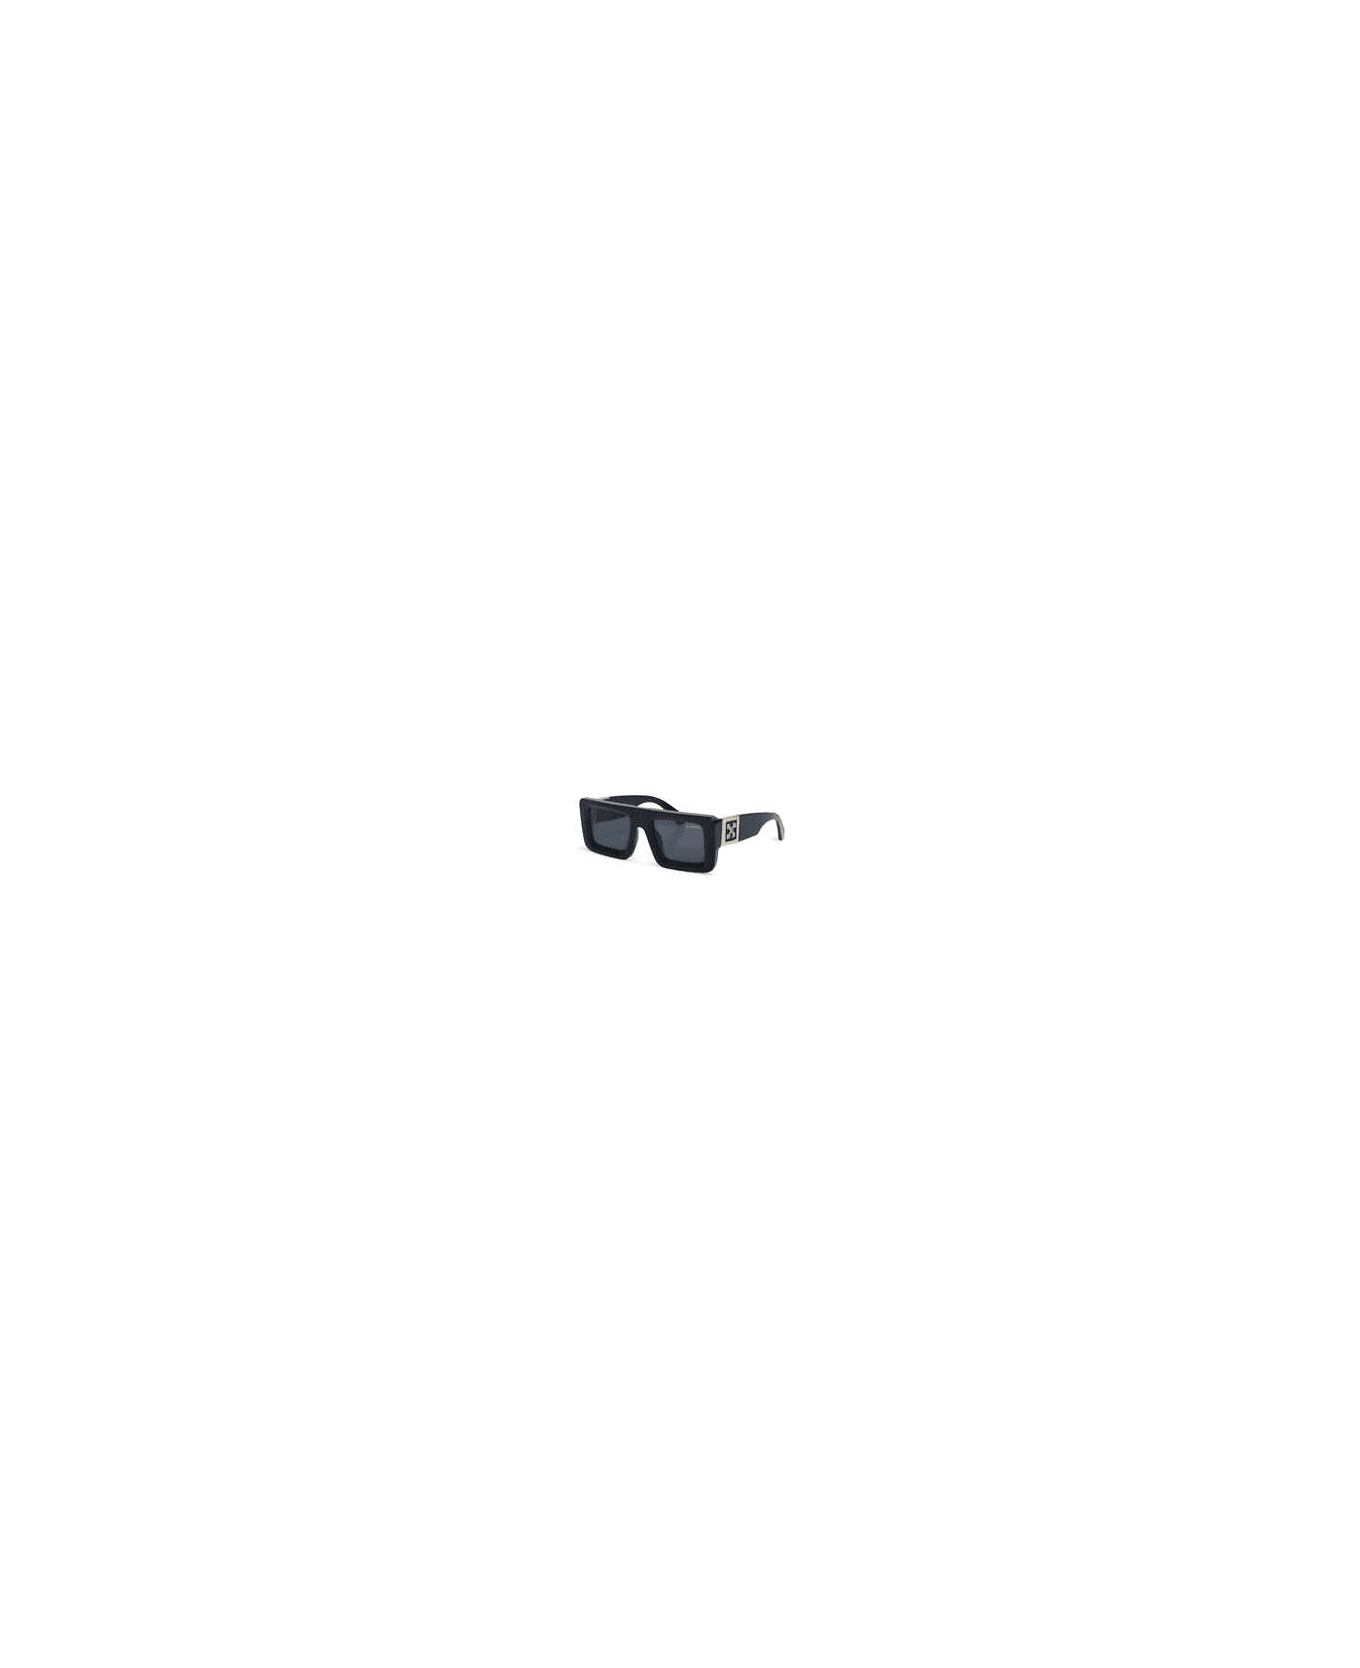 Off-White LEONARDO SUNGLASSES Sunglasses - Black Dark Grey サングラス